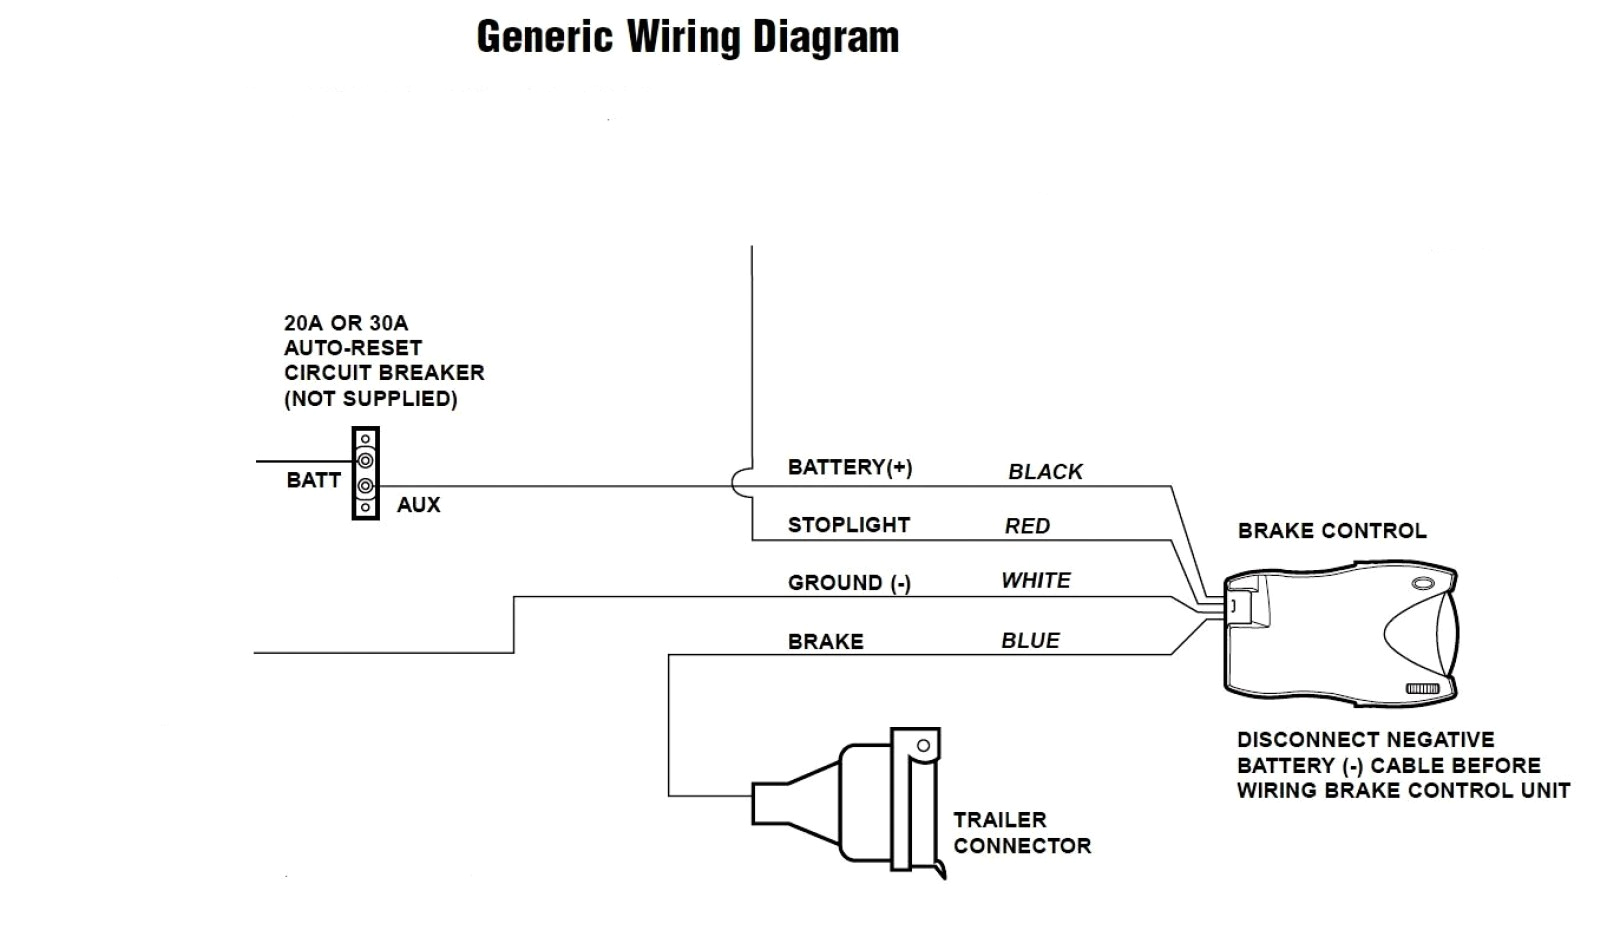 prodigy wiring diagram data schematic diagram tekonsha prodigy wiring diagram prodigy wiring diagram source electric brake controller